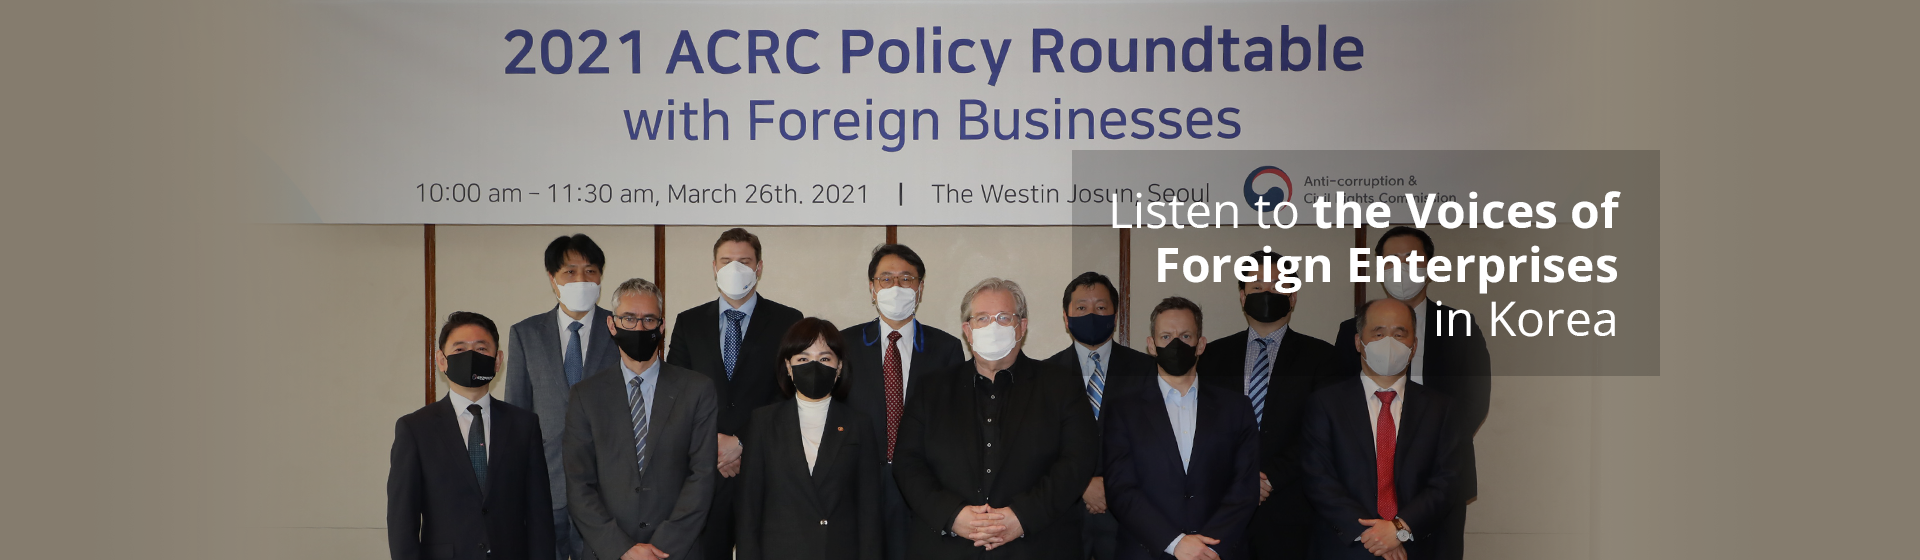 Listen to the Voices of
Foreign Enterprises
in Korea